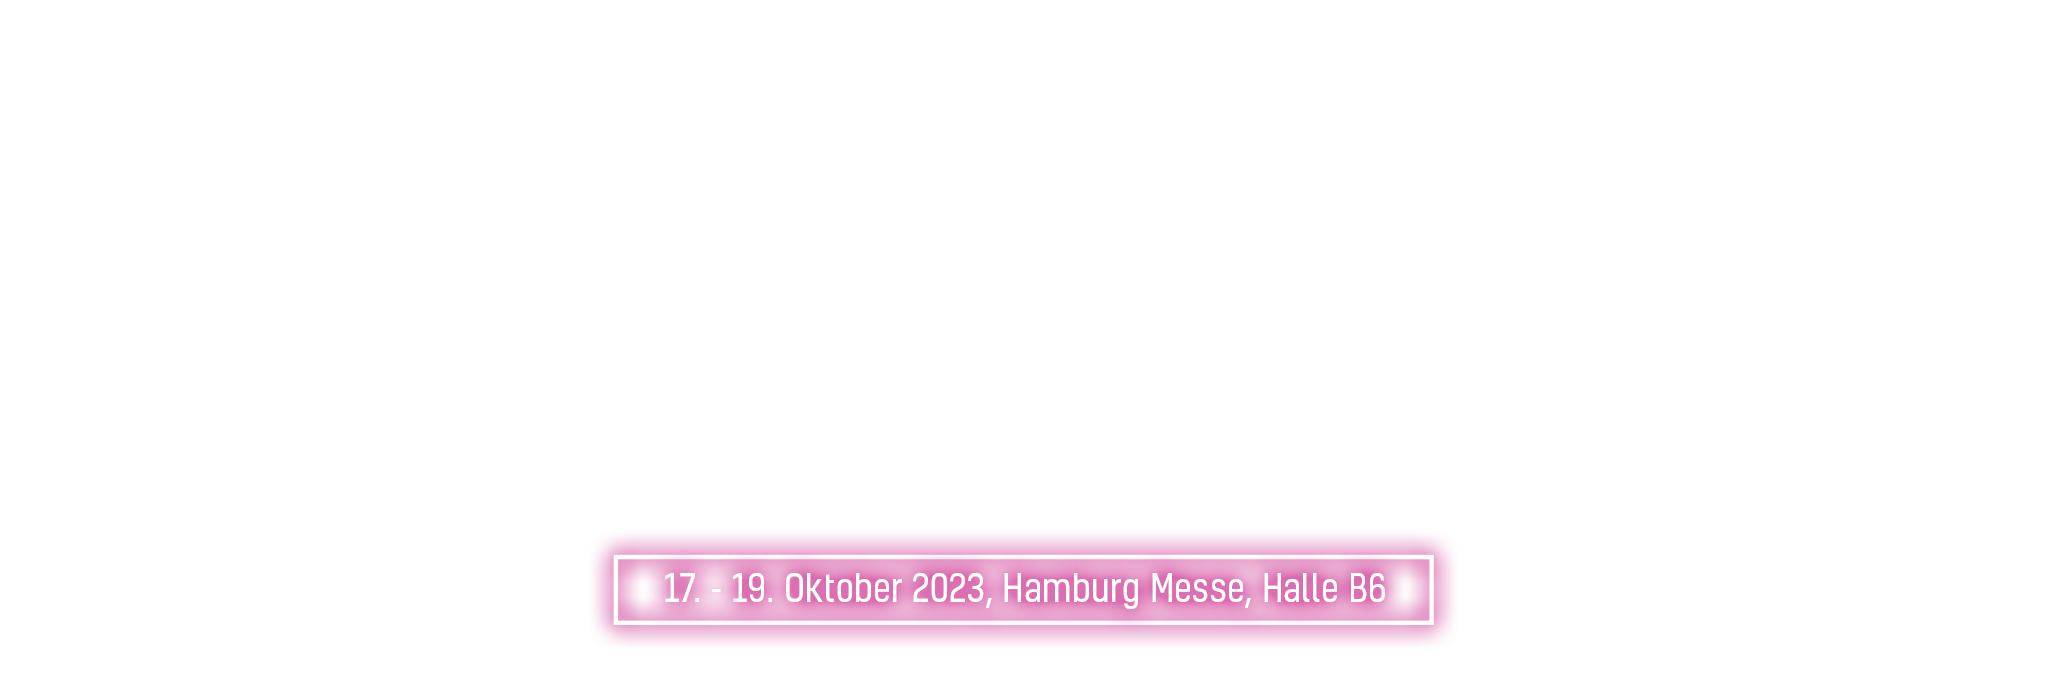 17. - 19. Oktober 2023, Hamburg Messe